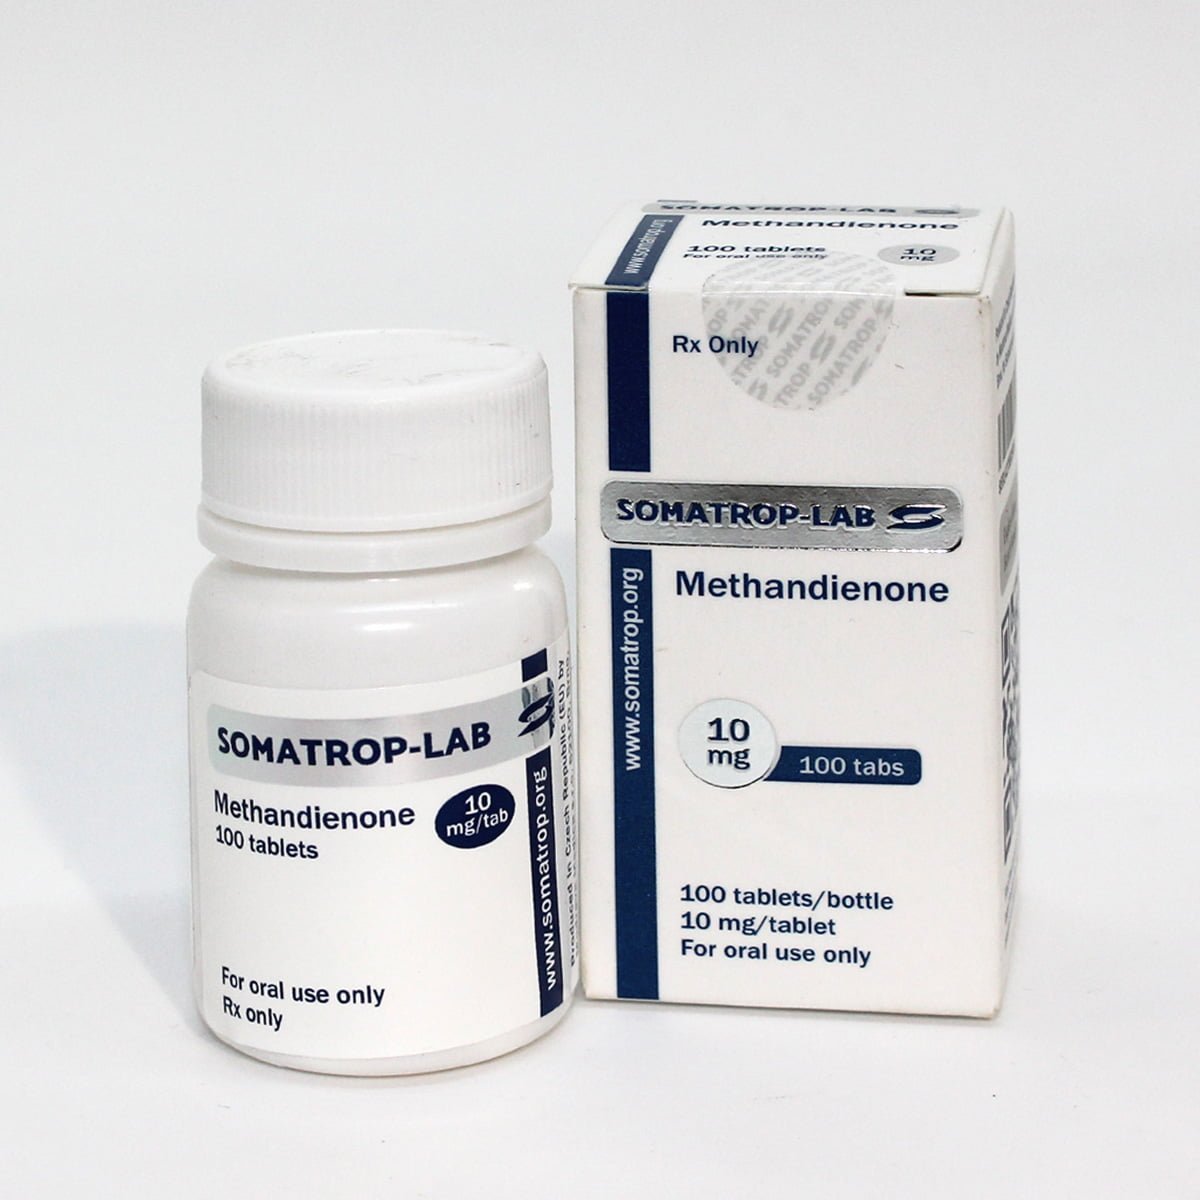 Somatrop-Lab Methandienone 10